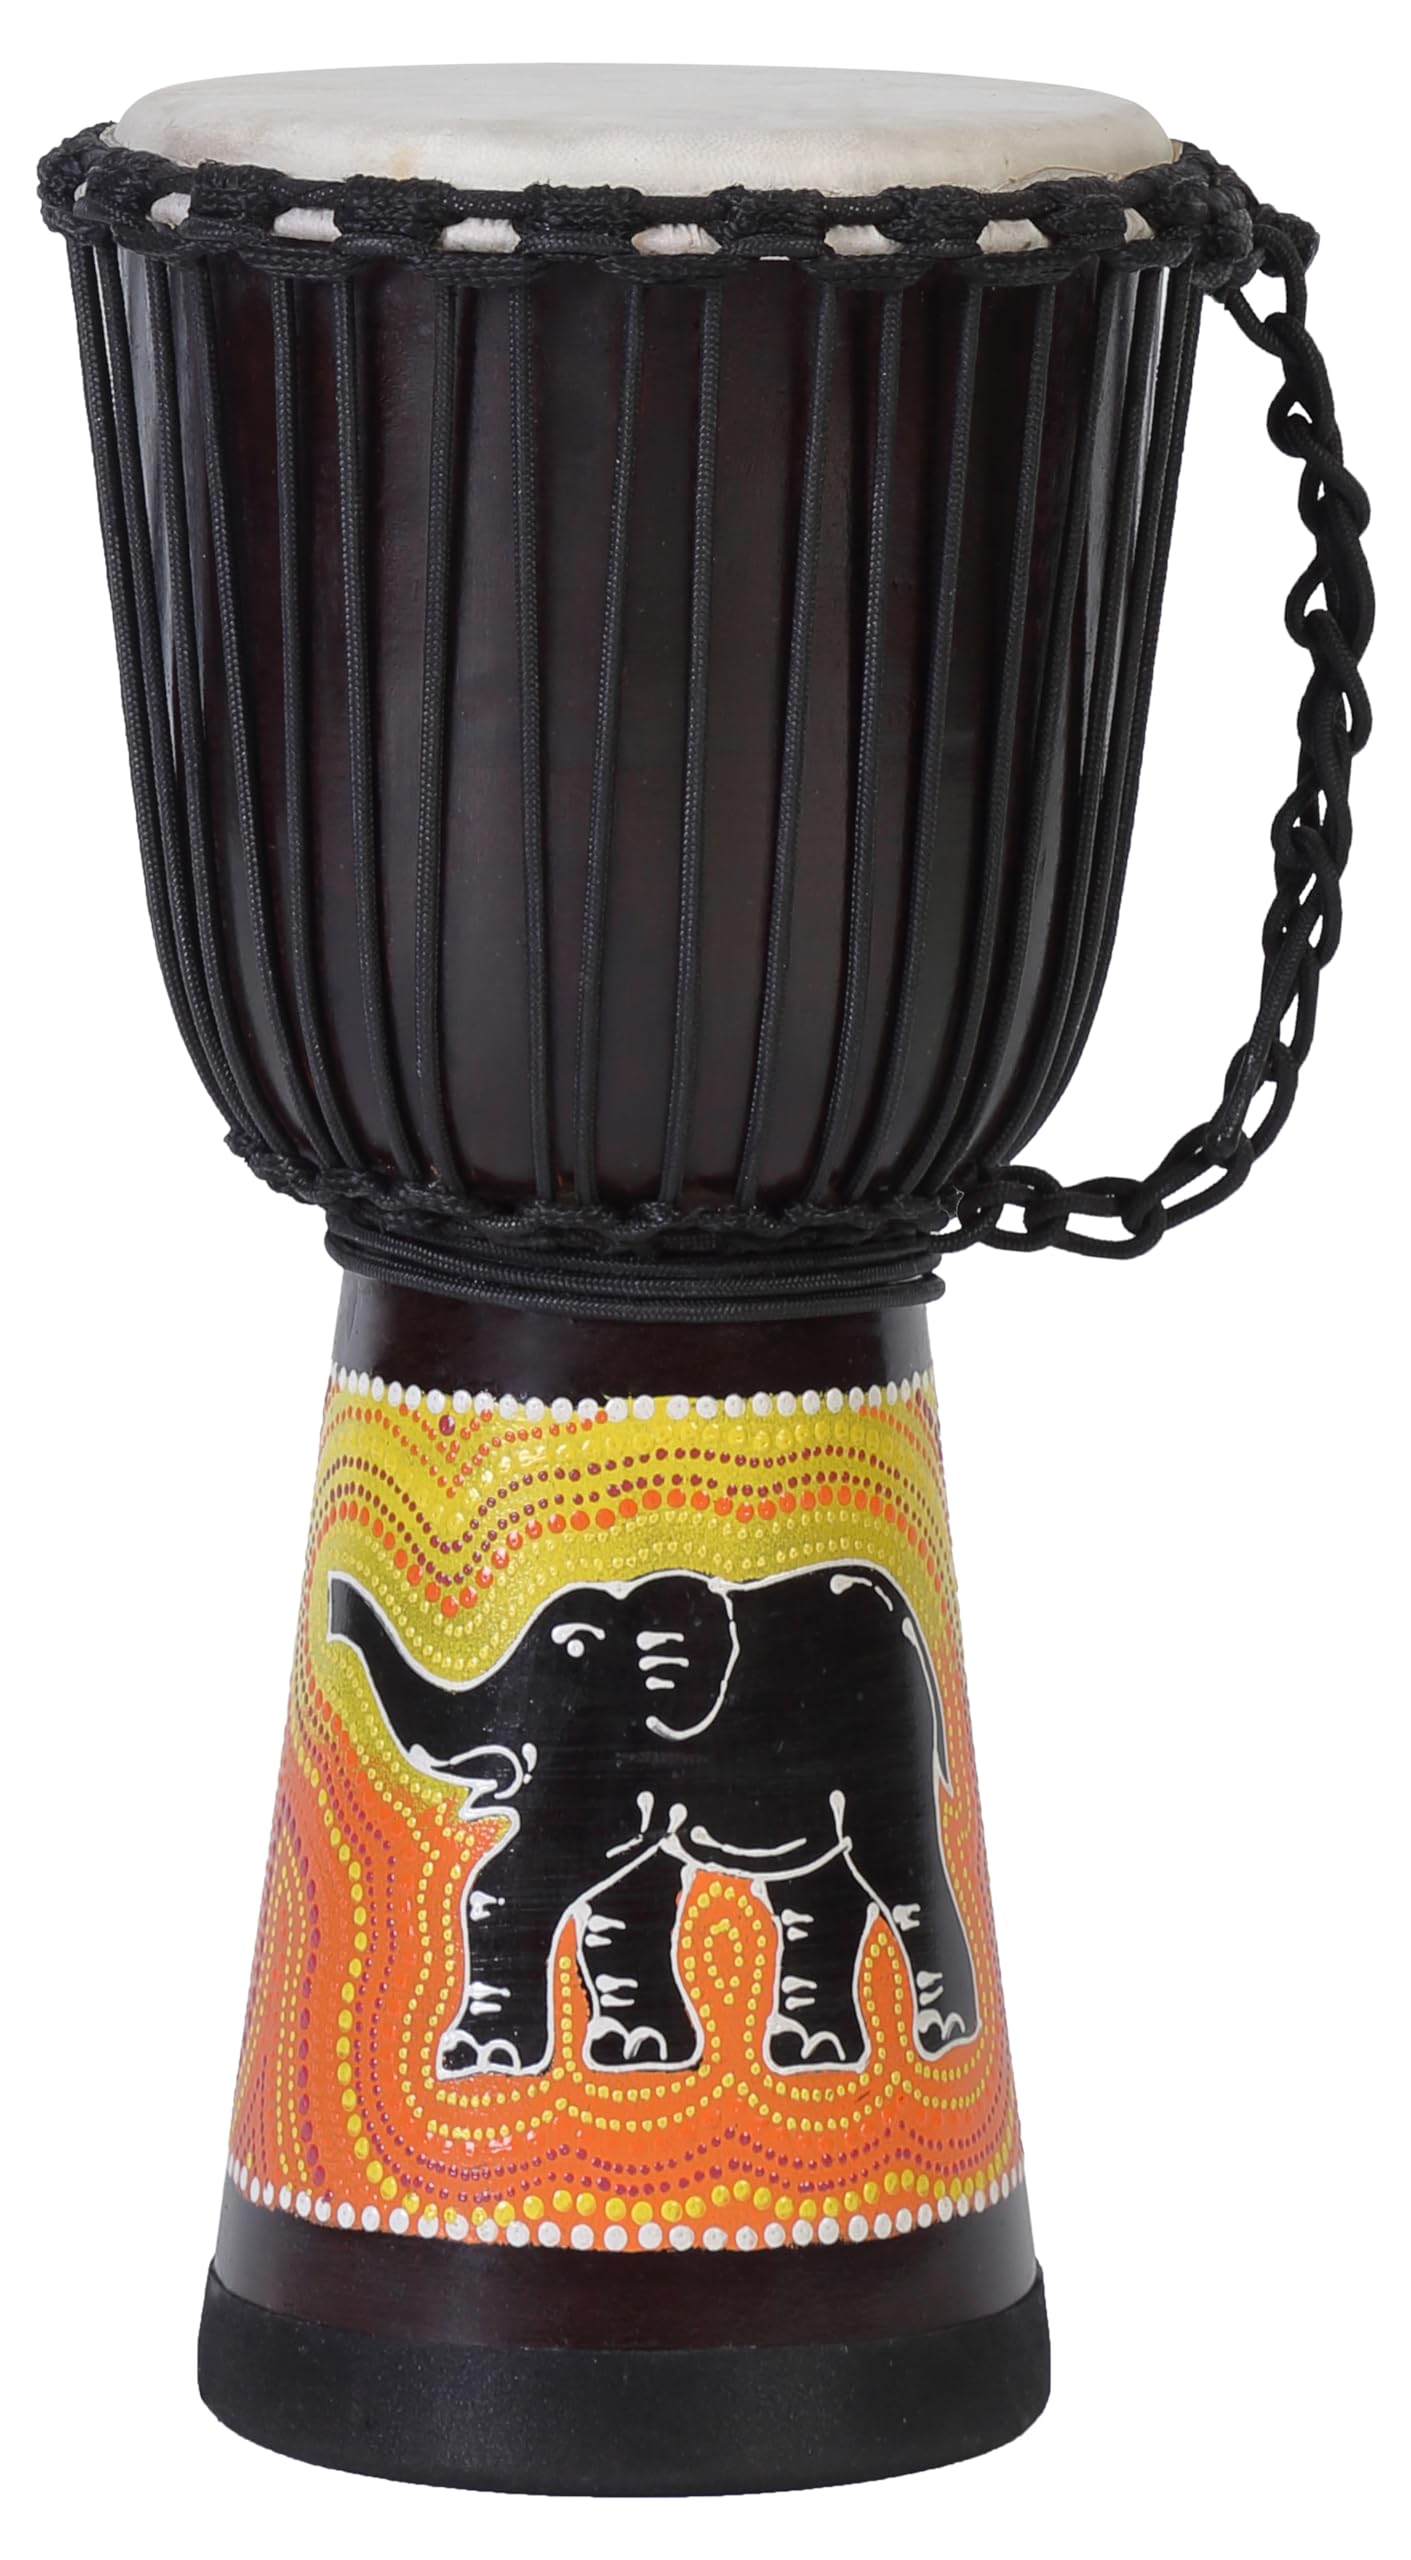 30cm Profi Djembe Trommel Bongo Drum Buschtrommel Percussion Motiv Elefant Afrika Art - (Für Kinder im Kindergarten Alter)